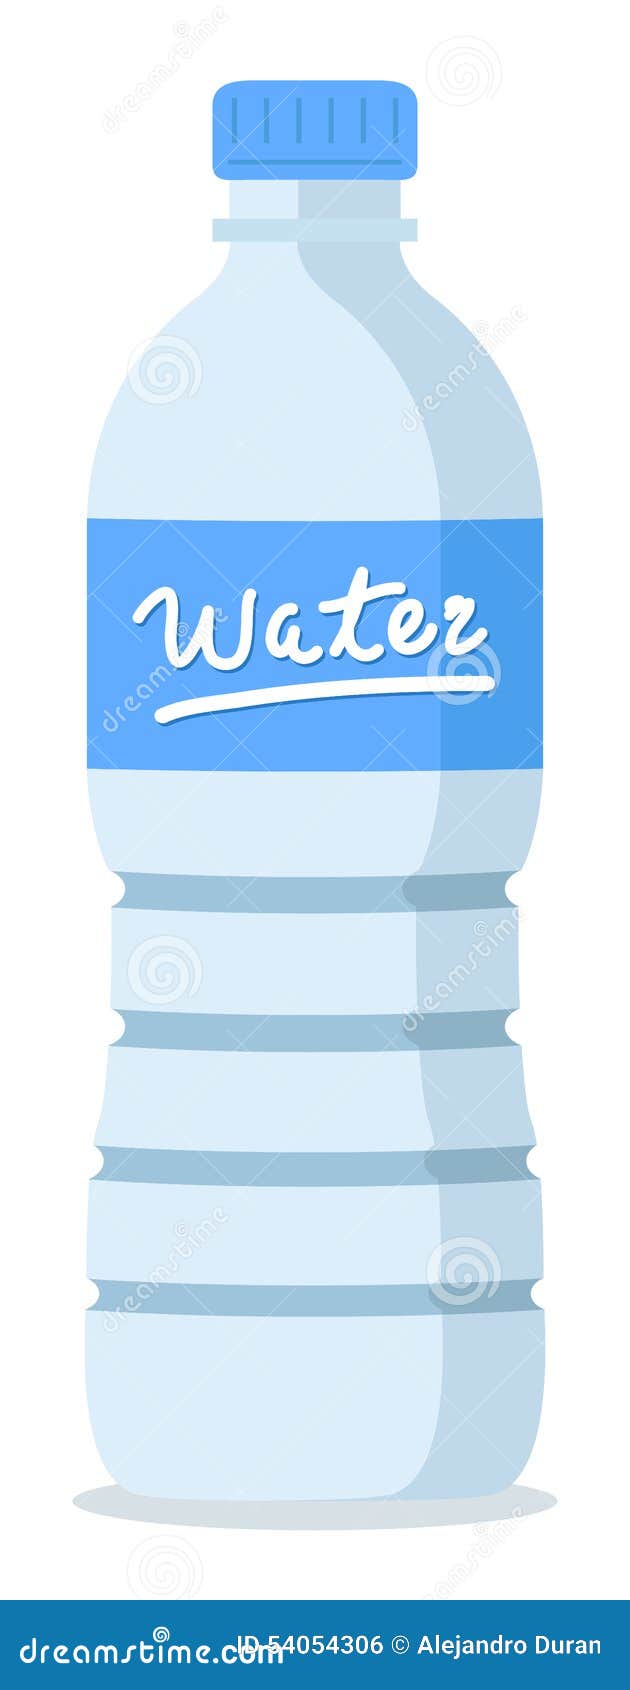 https://thumbs.dreamstime.com/z/water-bottle-plastic-recycled-blue-54054306.jpg